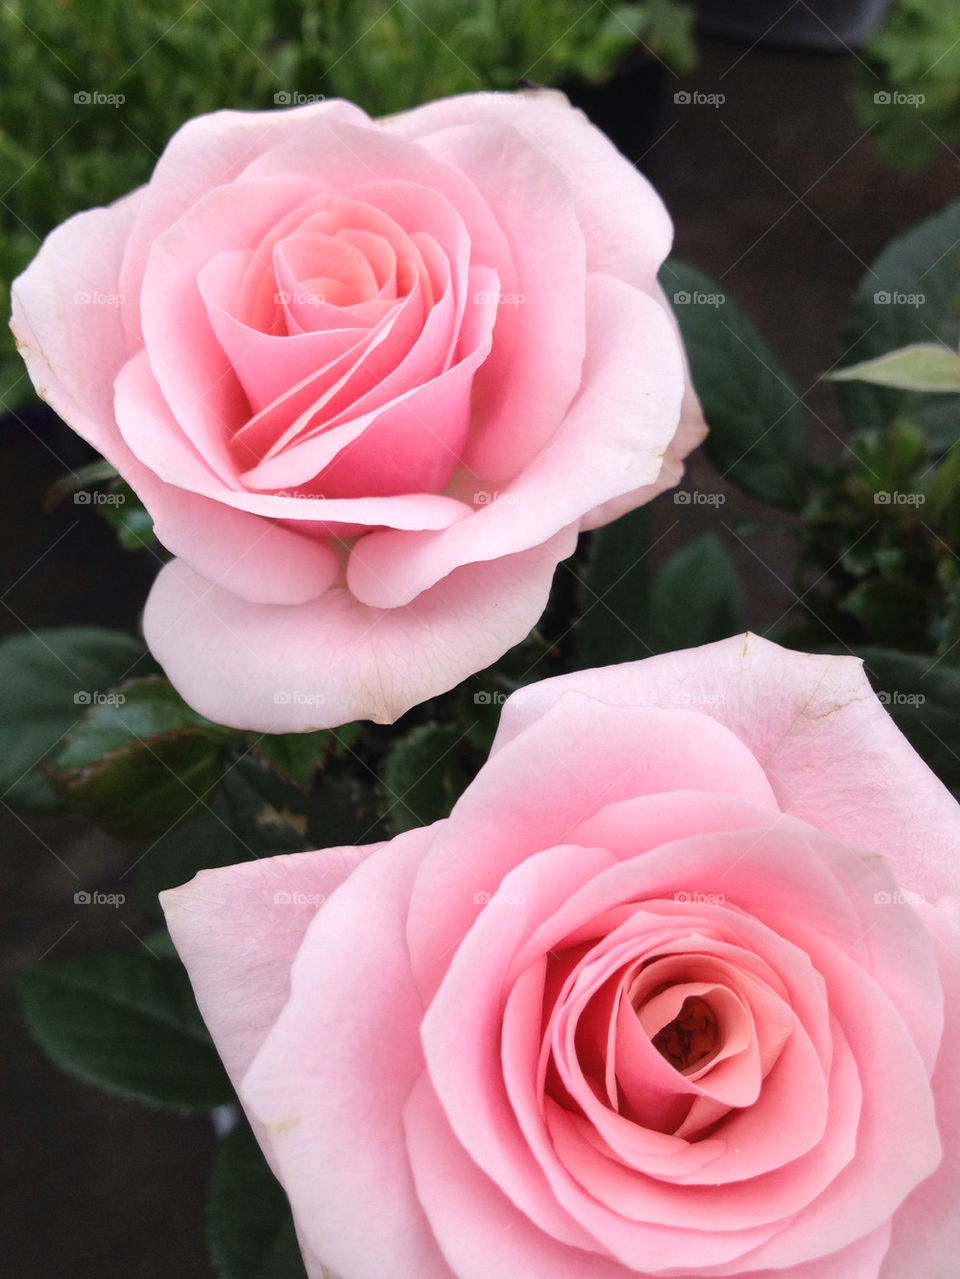 flowers pink roses two by leewee